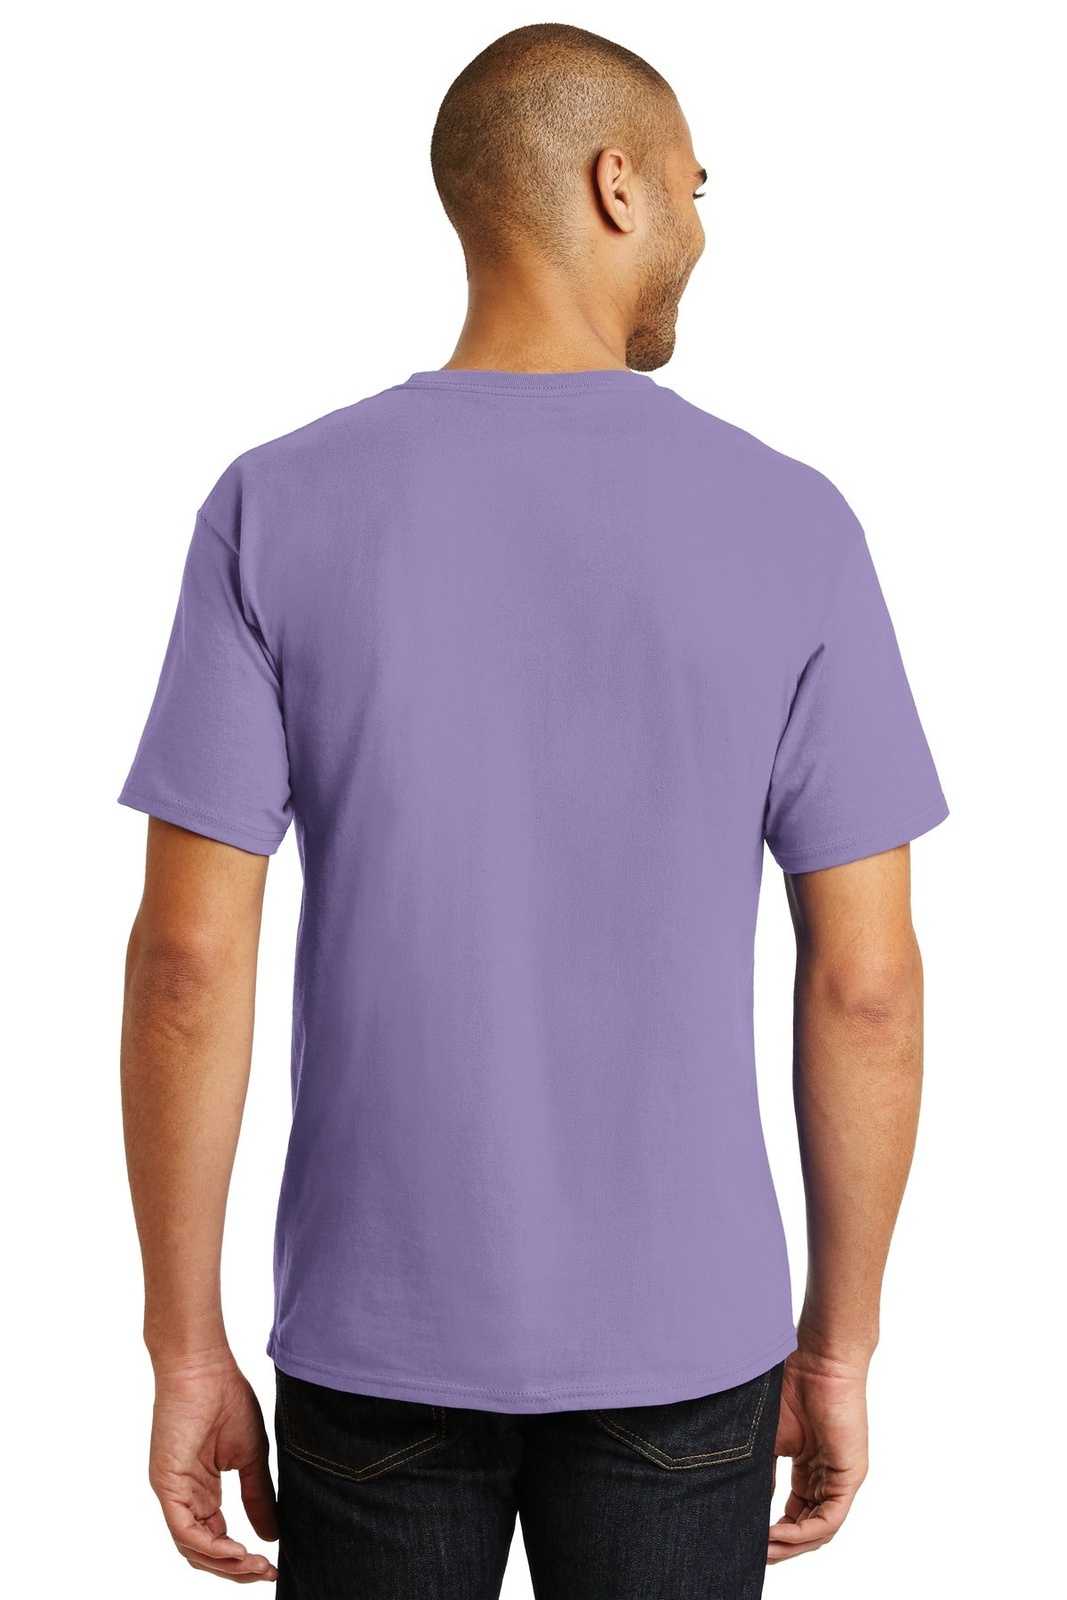 Hanes 5250 Tagless 100% Cotton T-Shirt - Lavender - HIT a Double